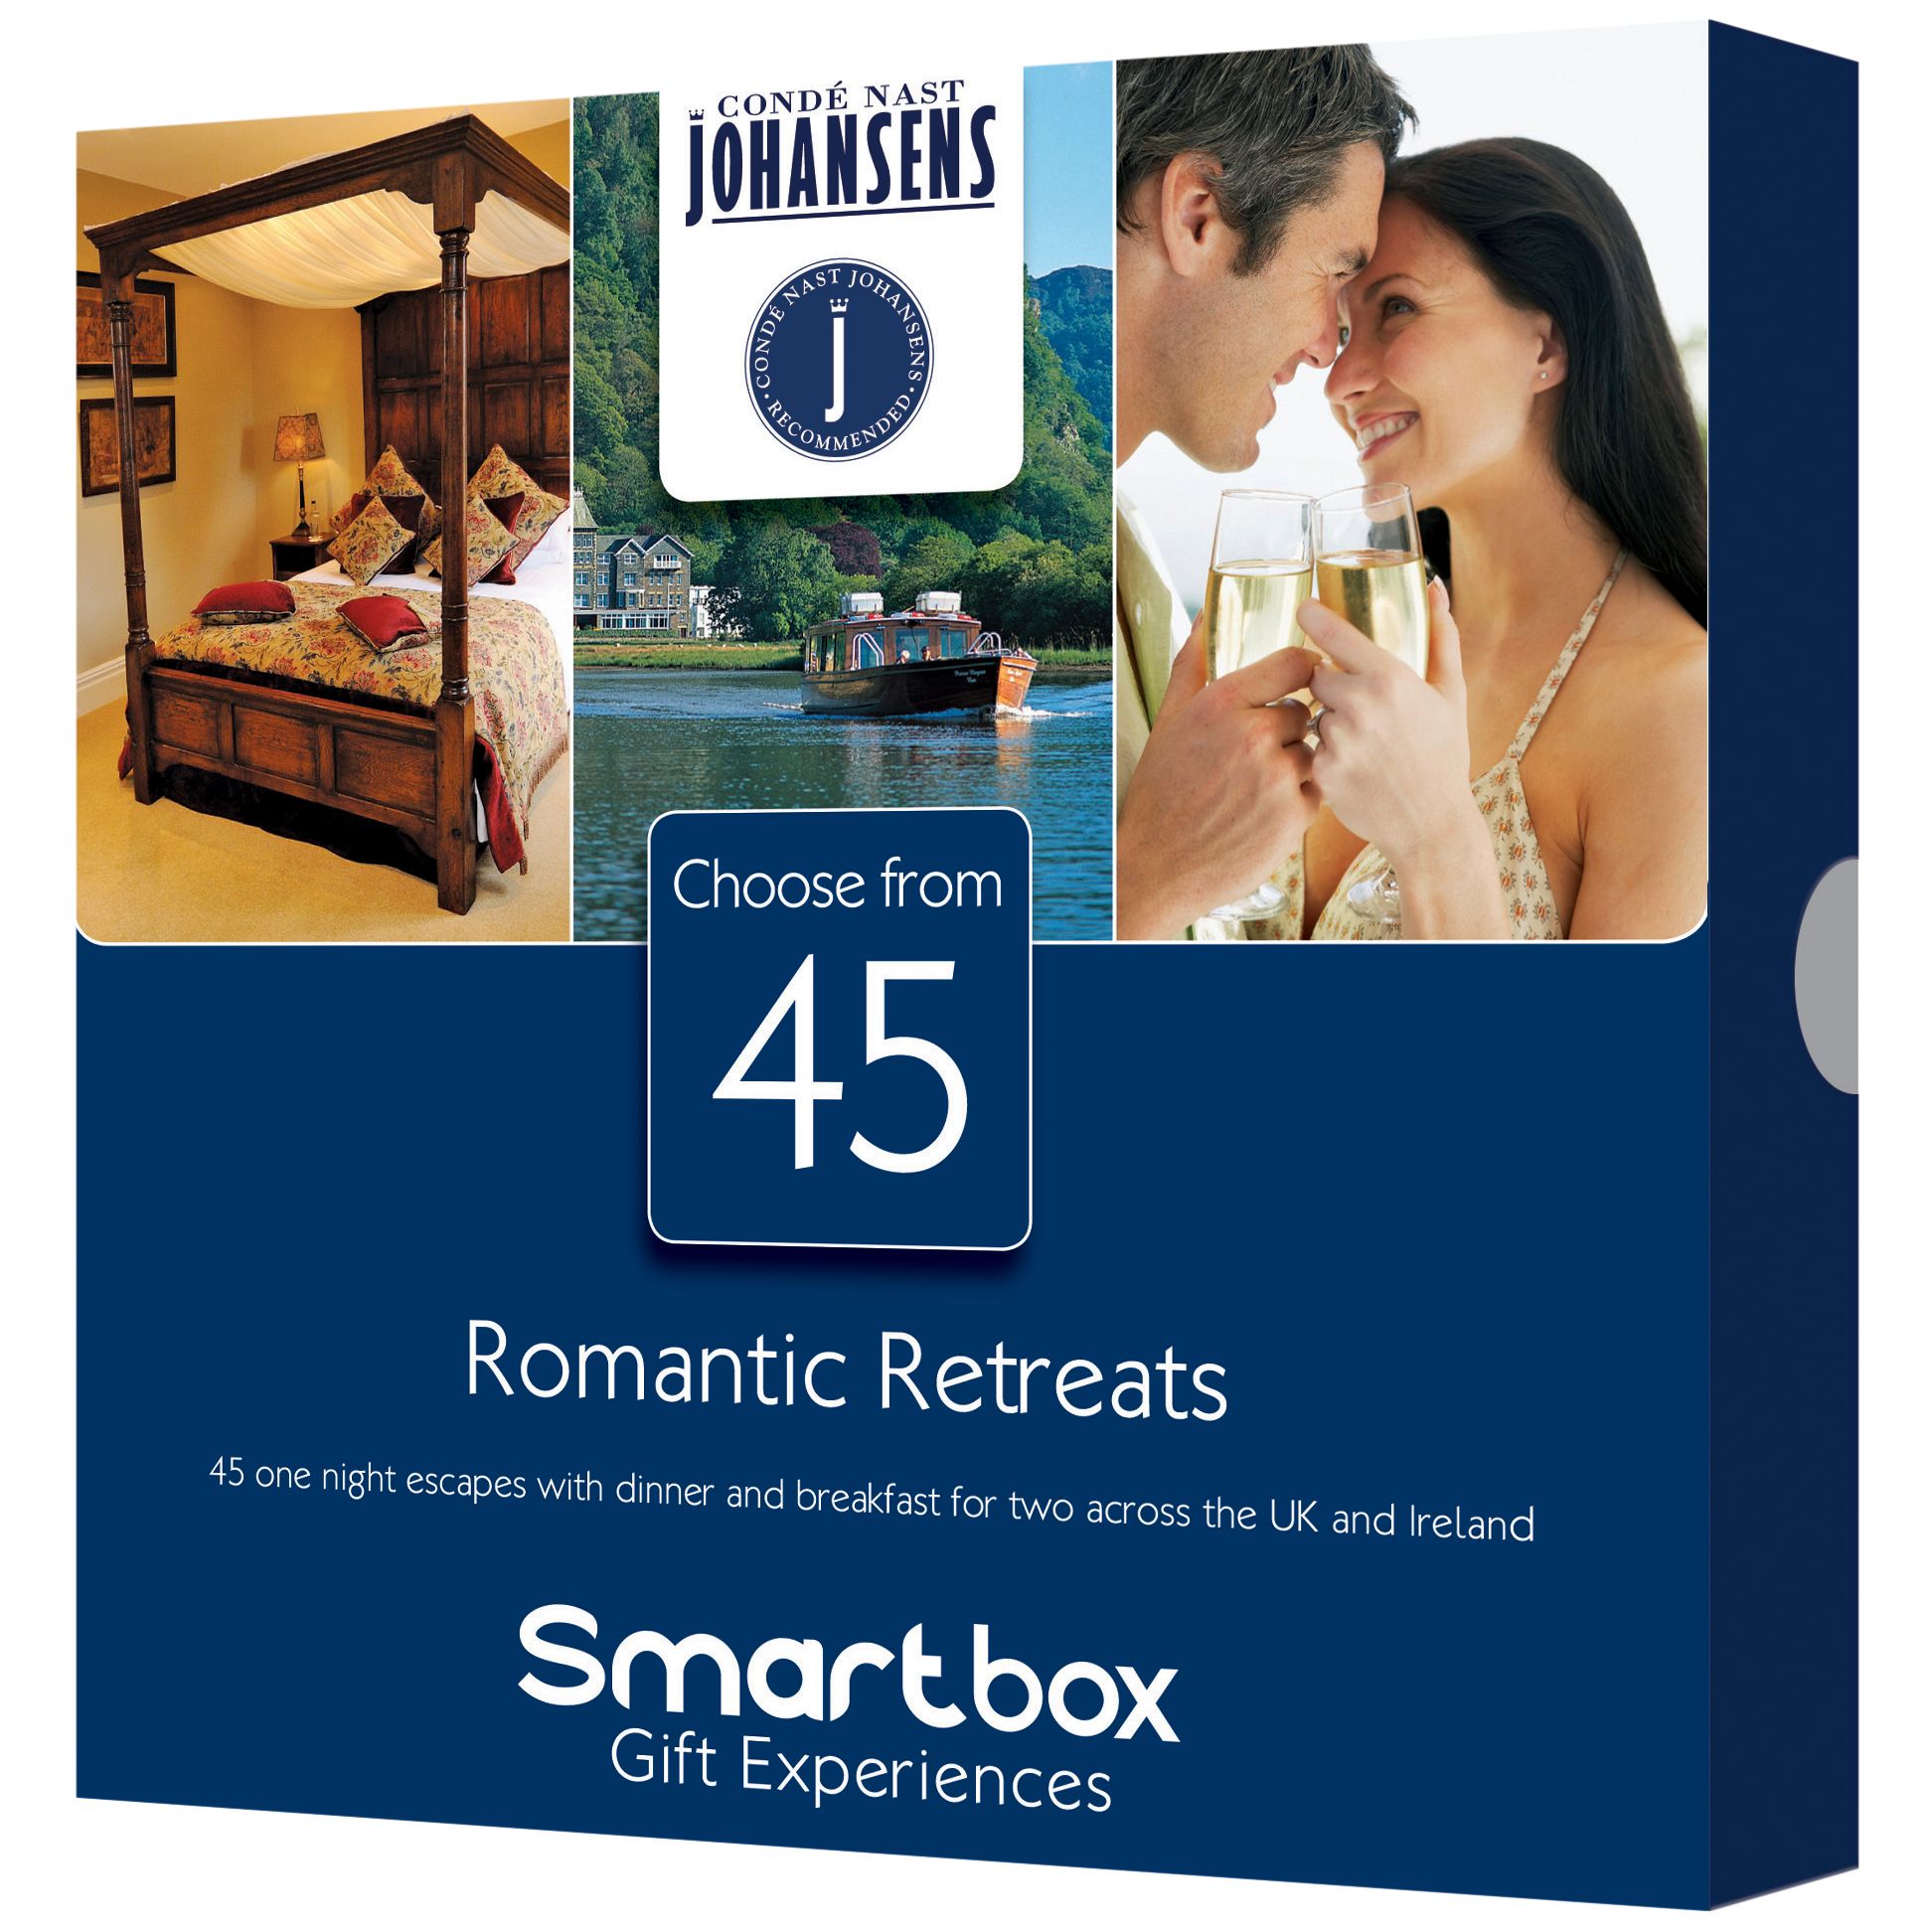 Smartbox Romantic Retreats for 2 at John Lewis